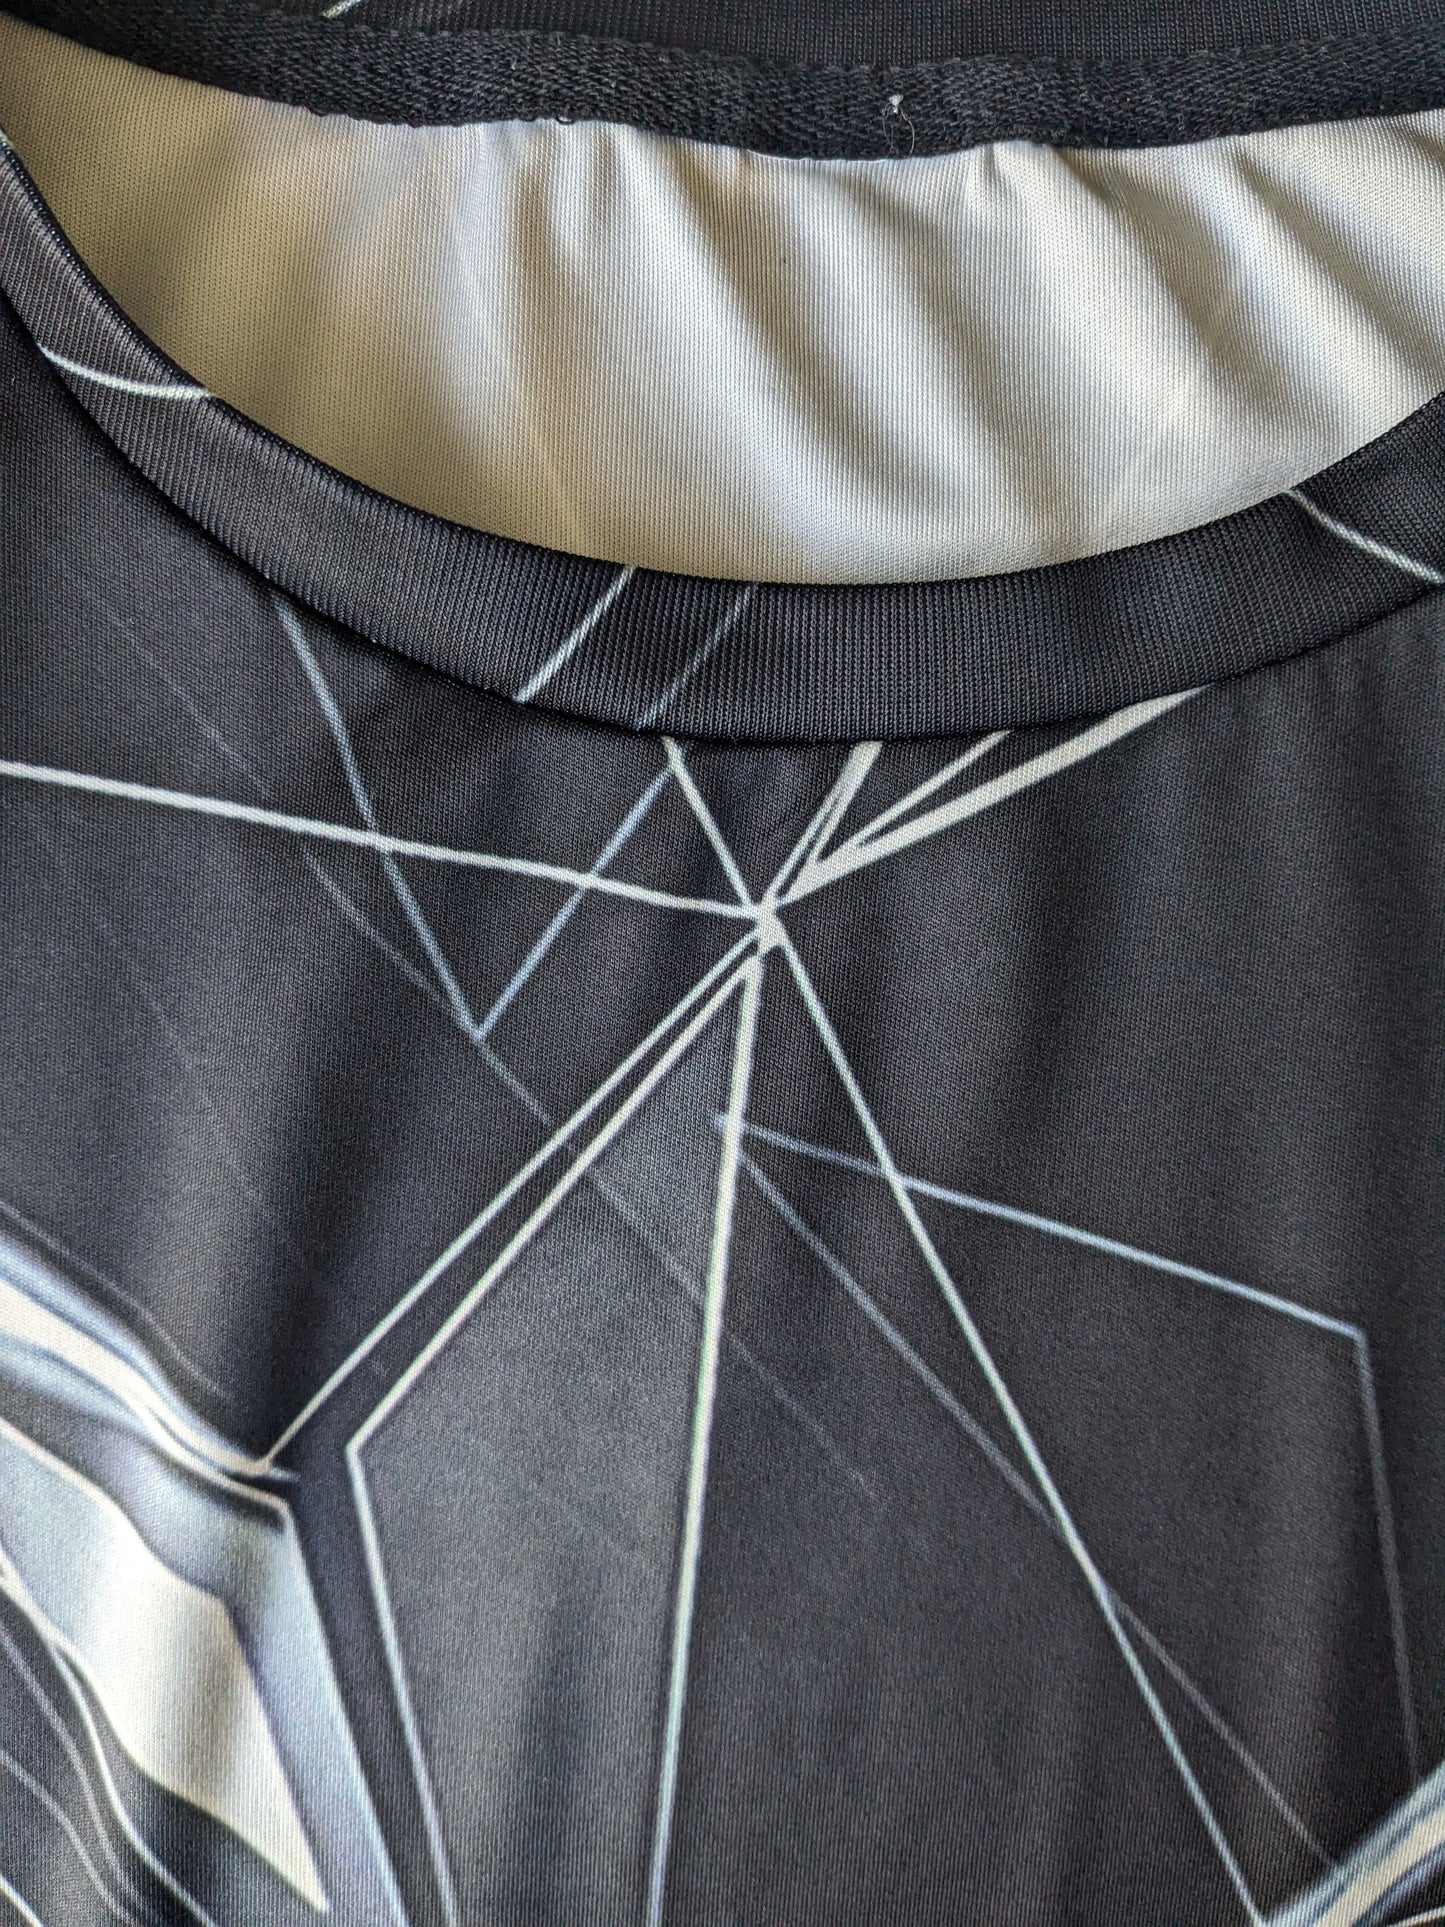 Geometric Print shirt. Black white colored. Size M. Stretch.